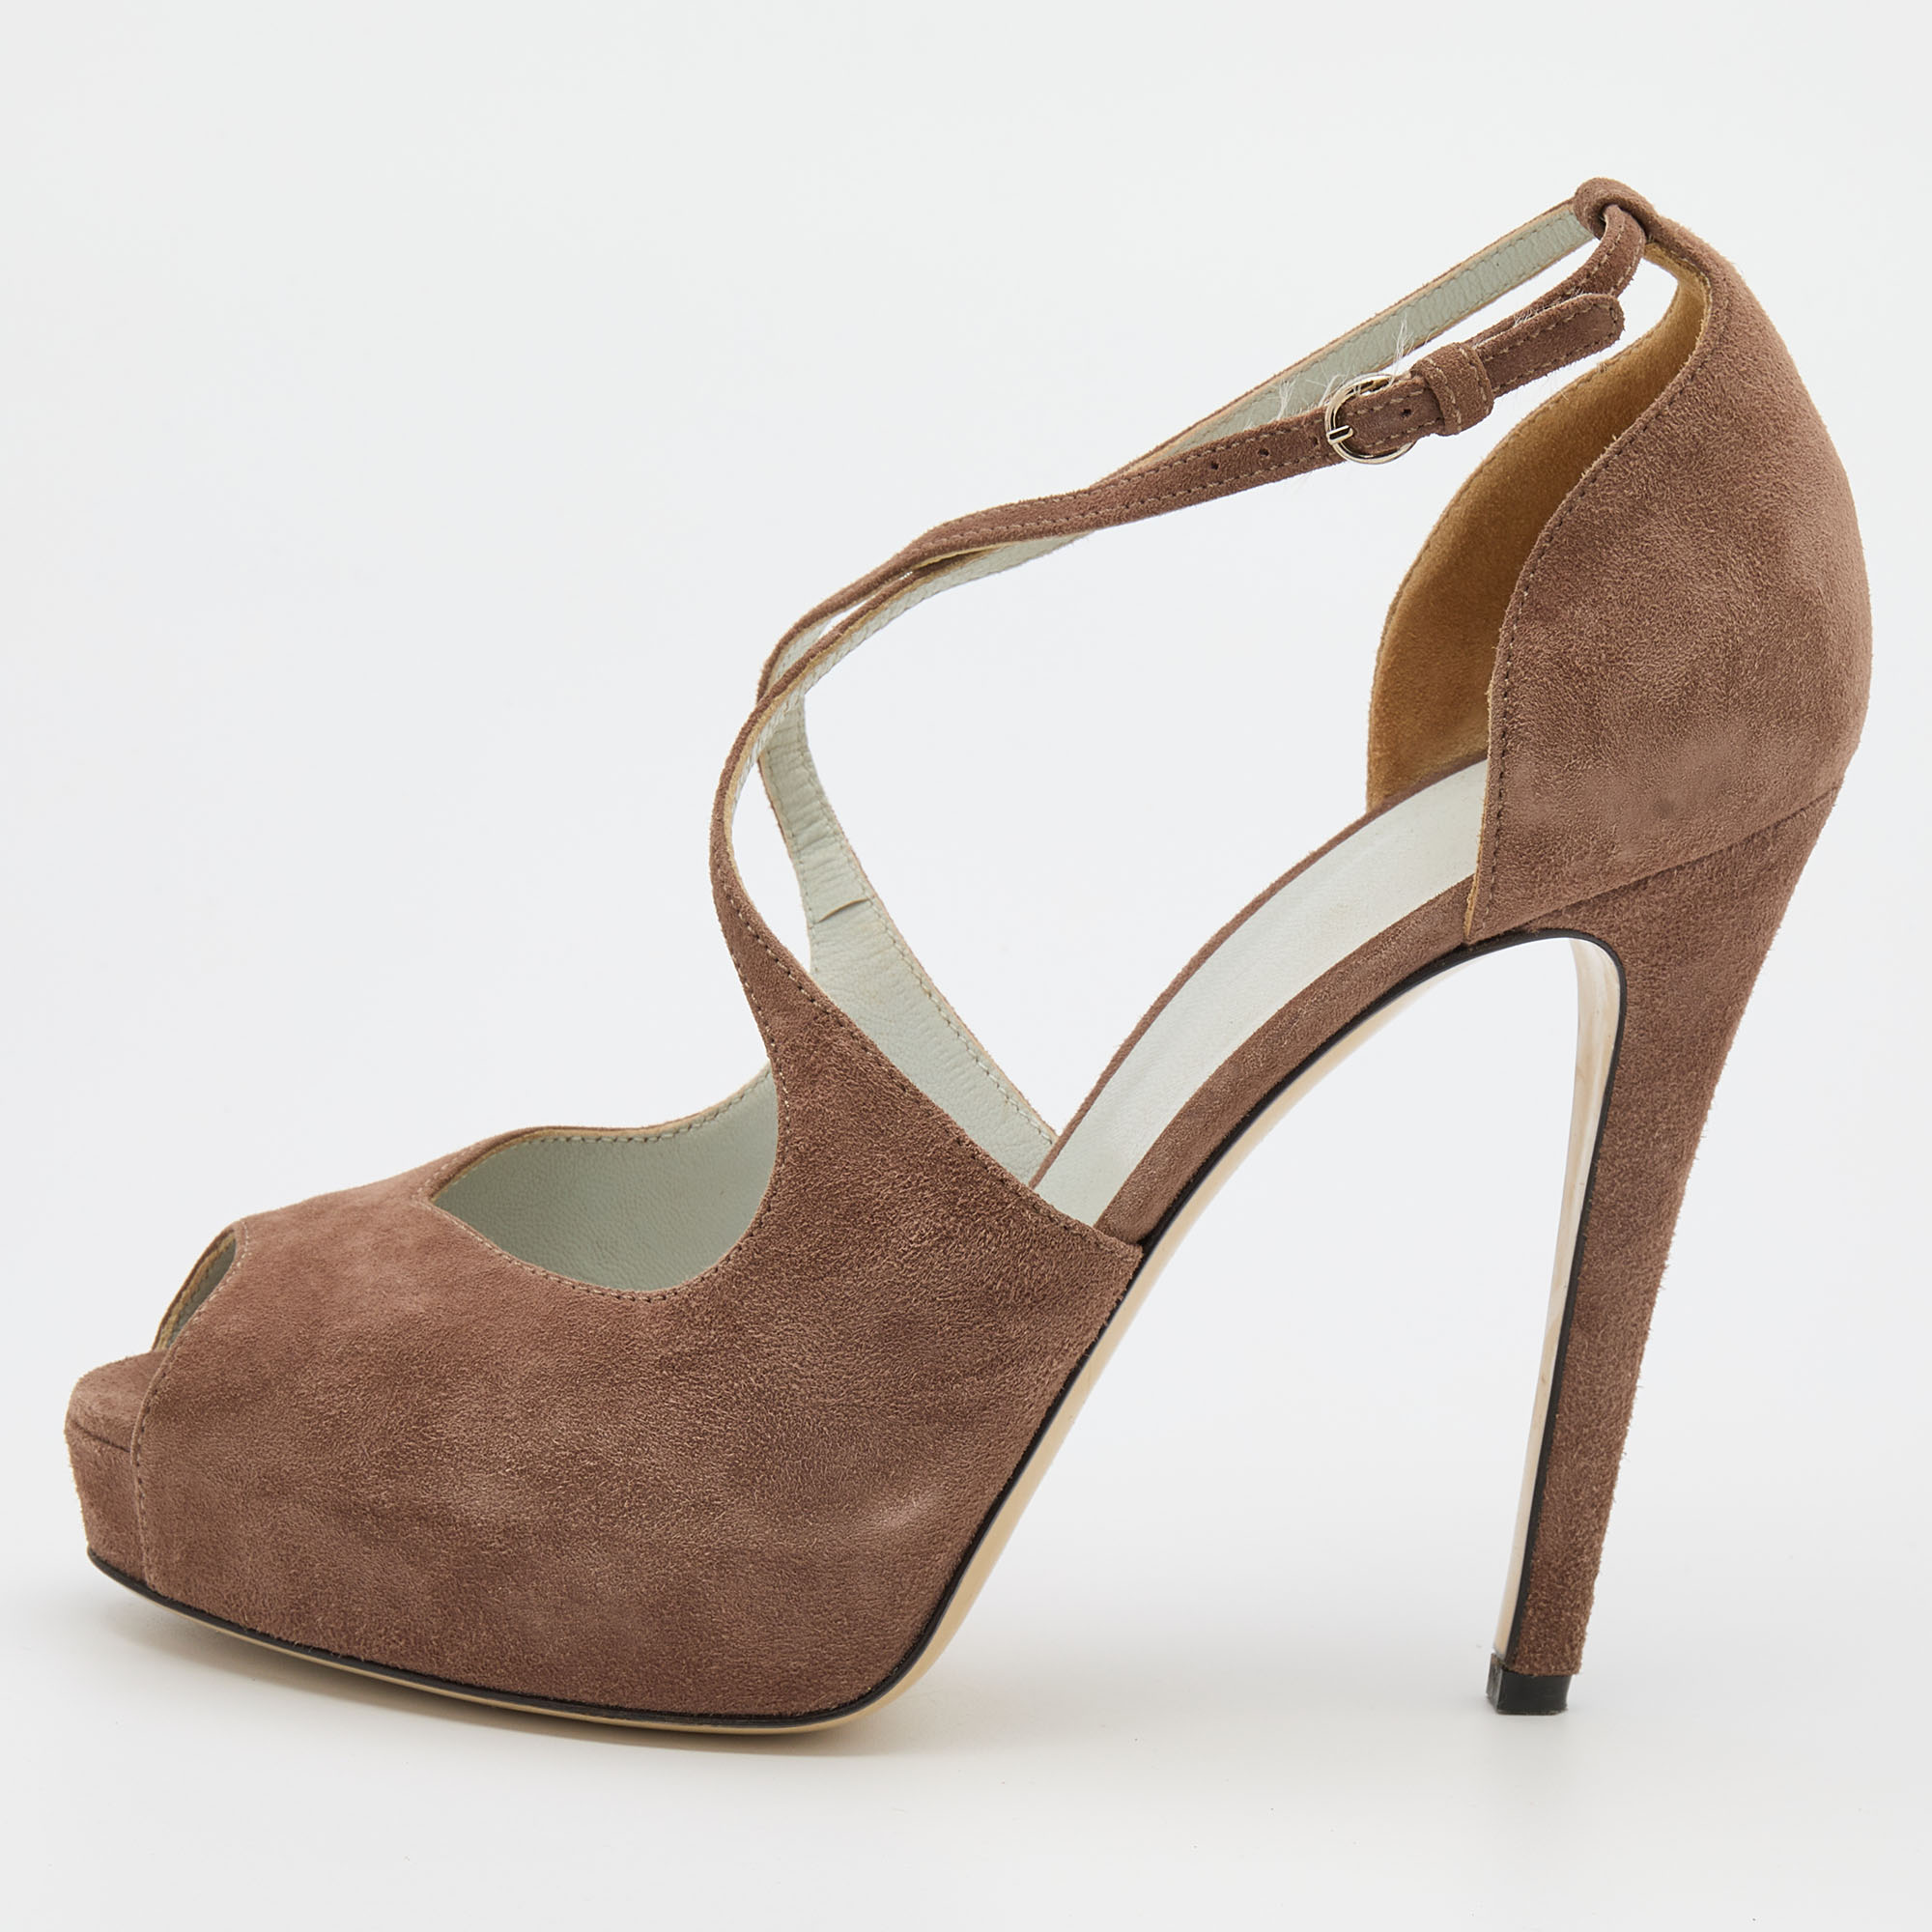 D&G Brown Suede Open Toe Platform Sandals Size 38.5